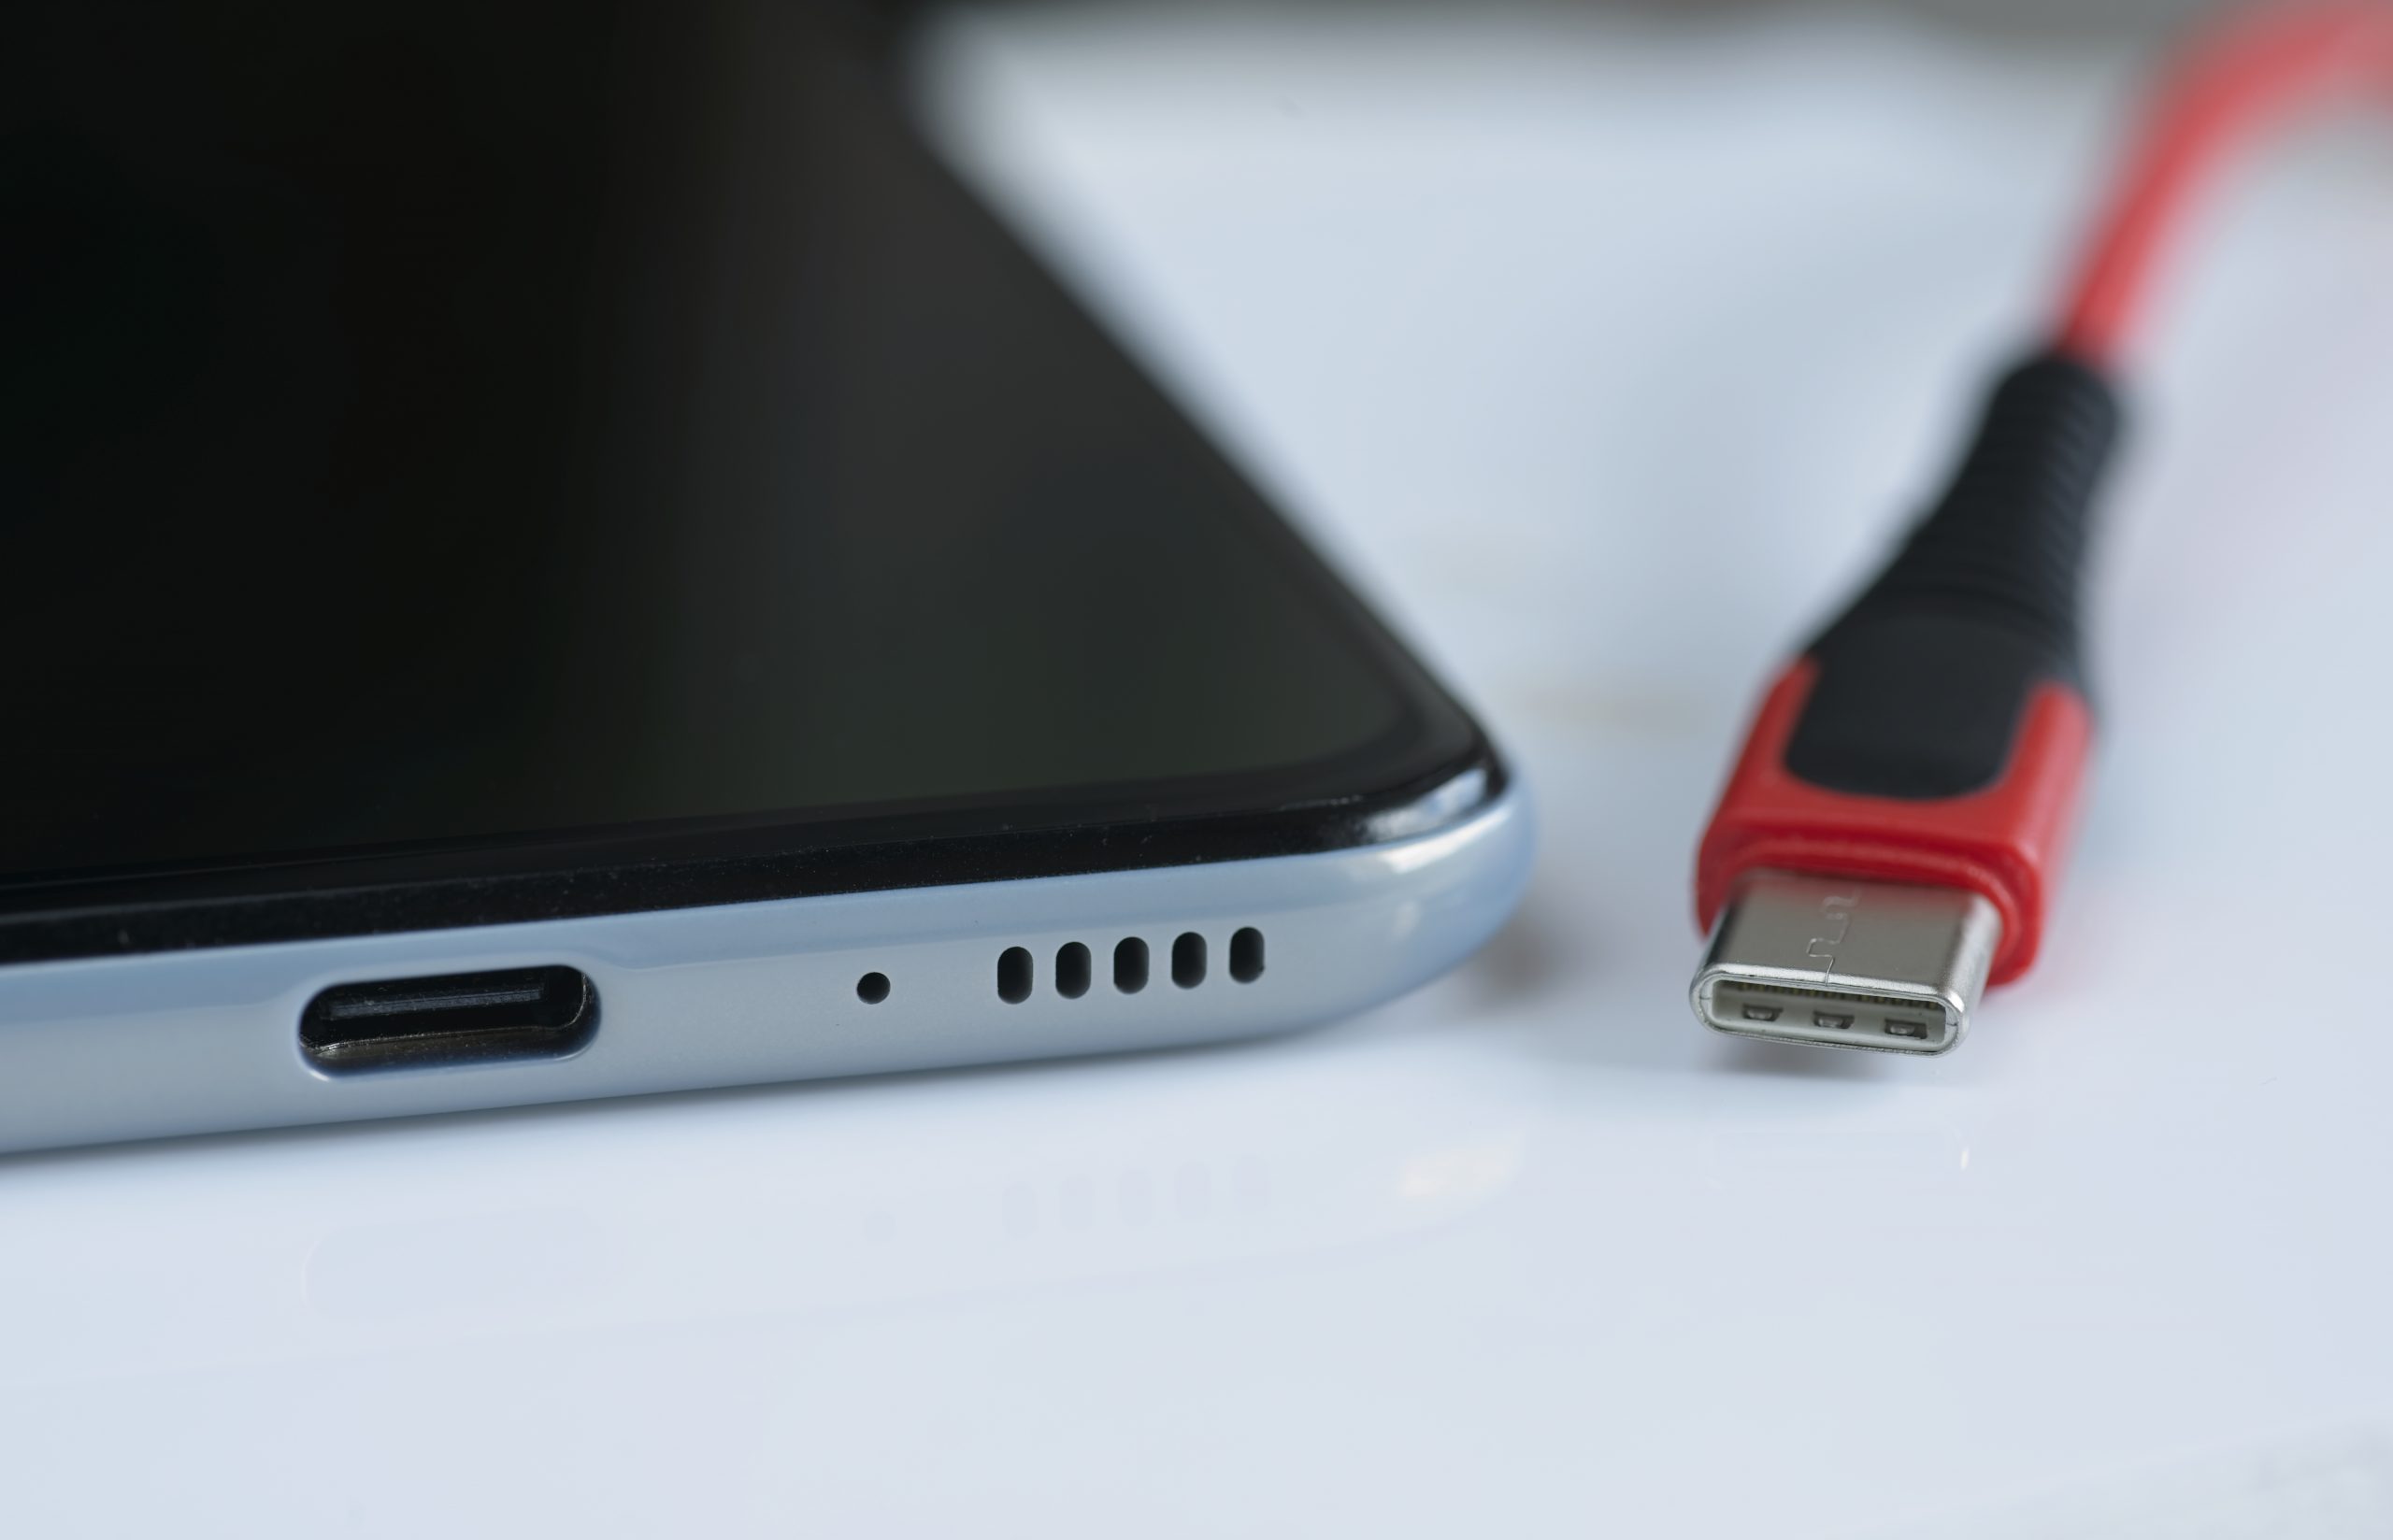 EU plans to legislate for common phone charger despite Apple grumbles